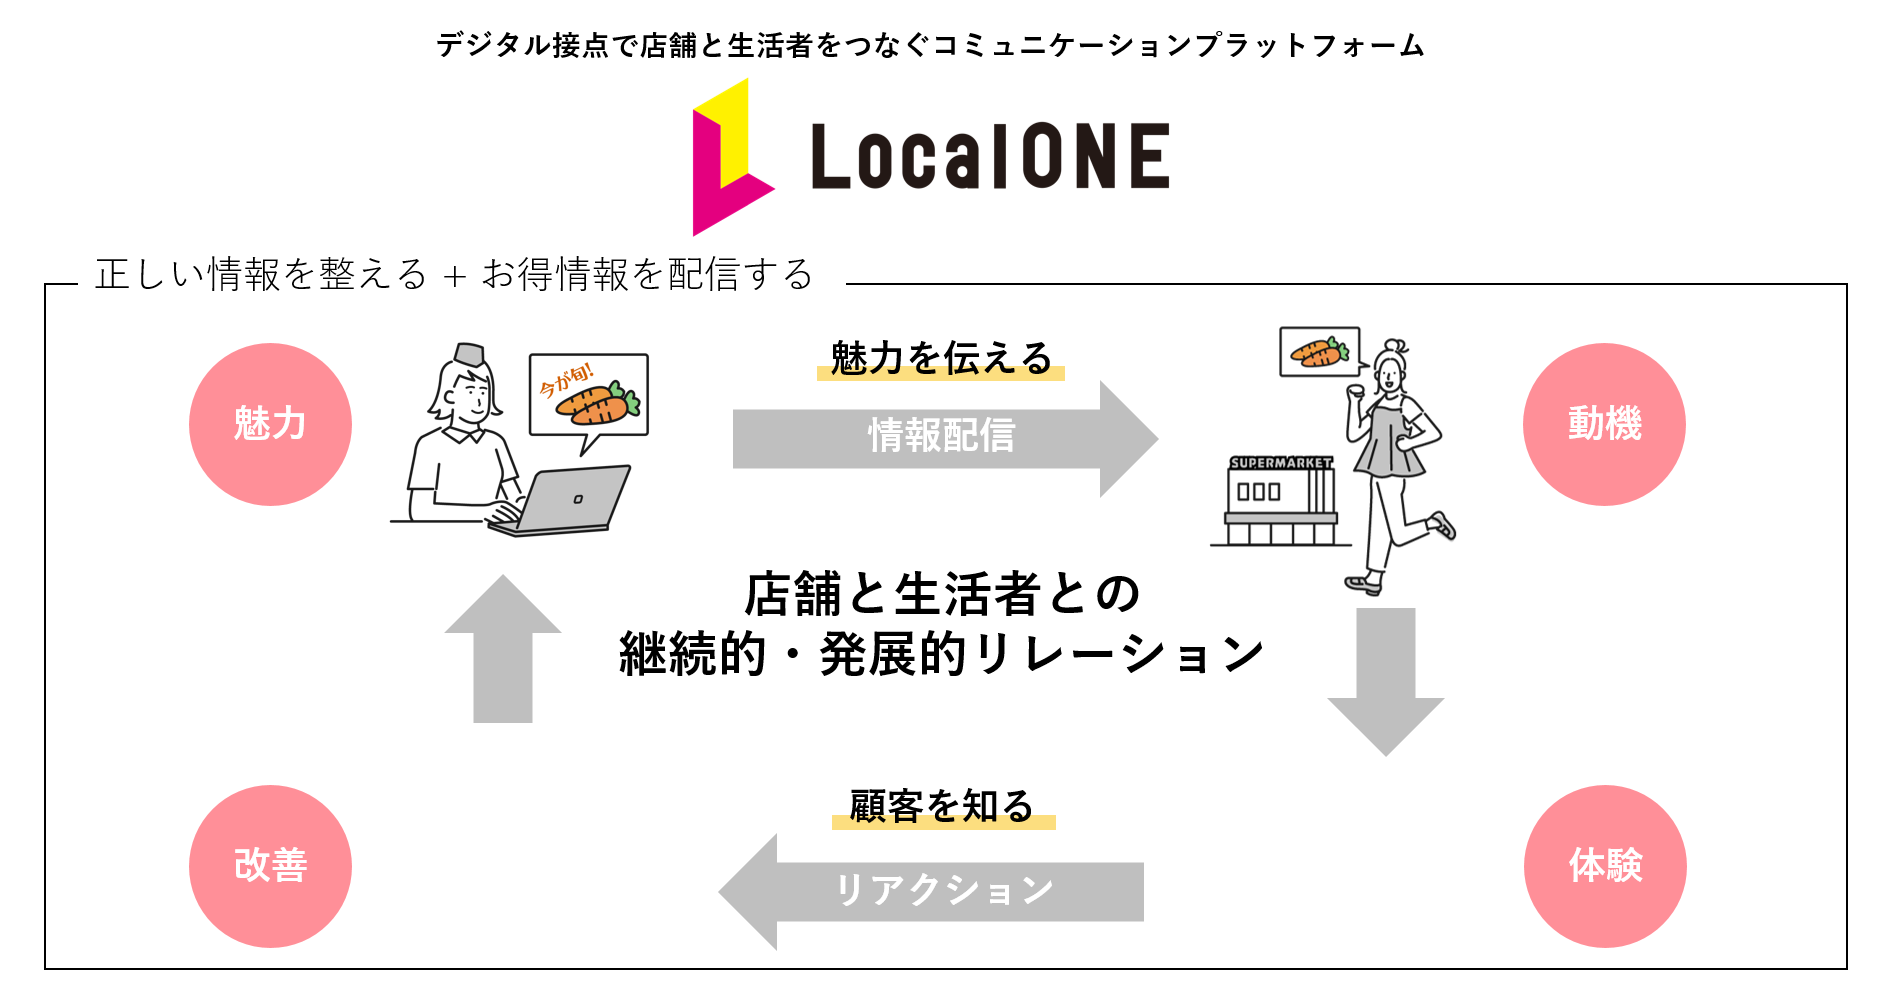 ONE COMPATH、店舗情報プラットフォーム「LocalONE」提供開始